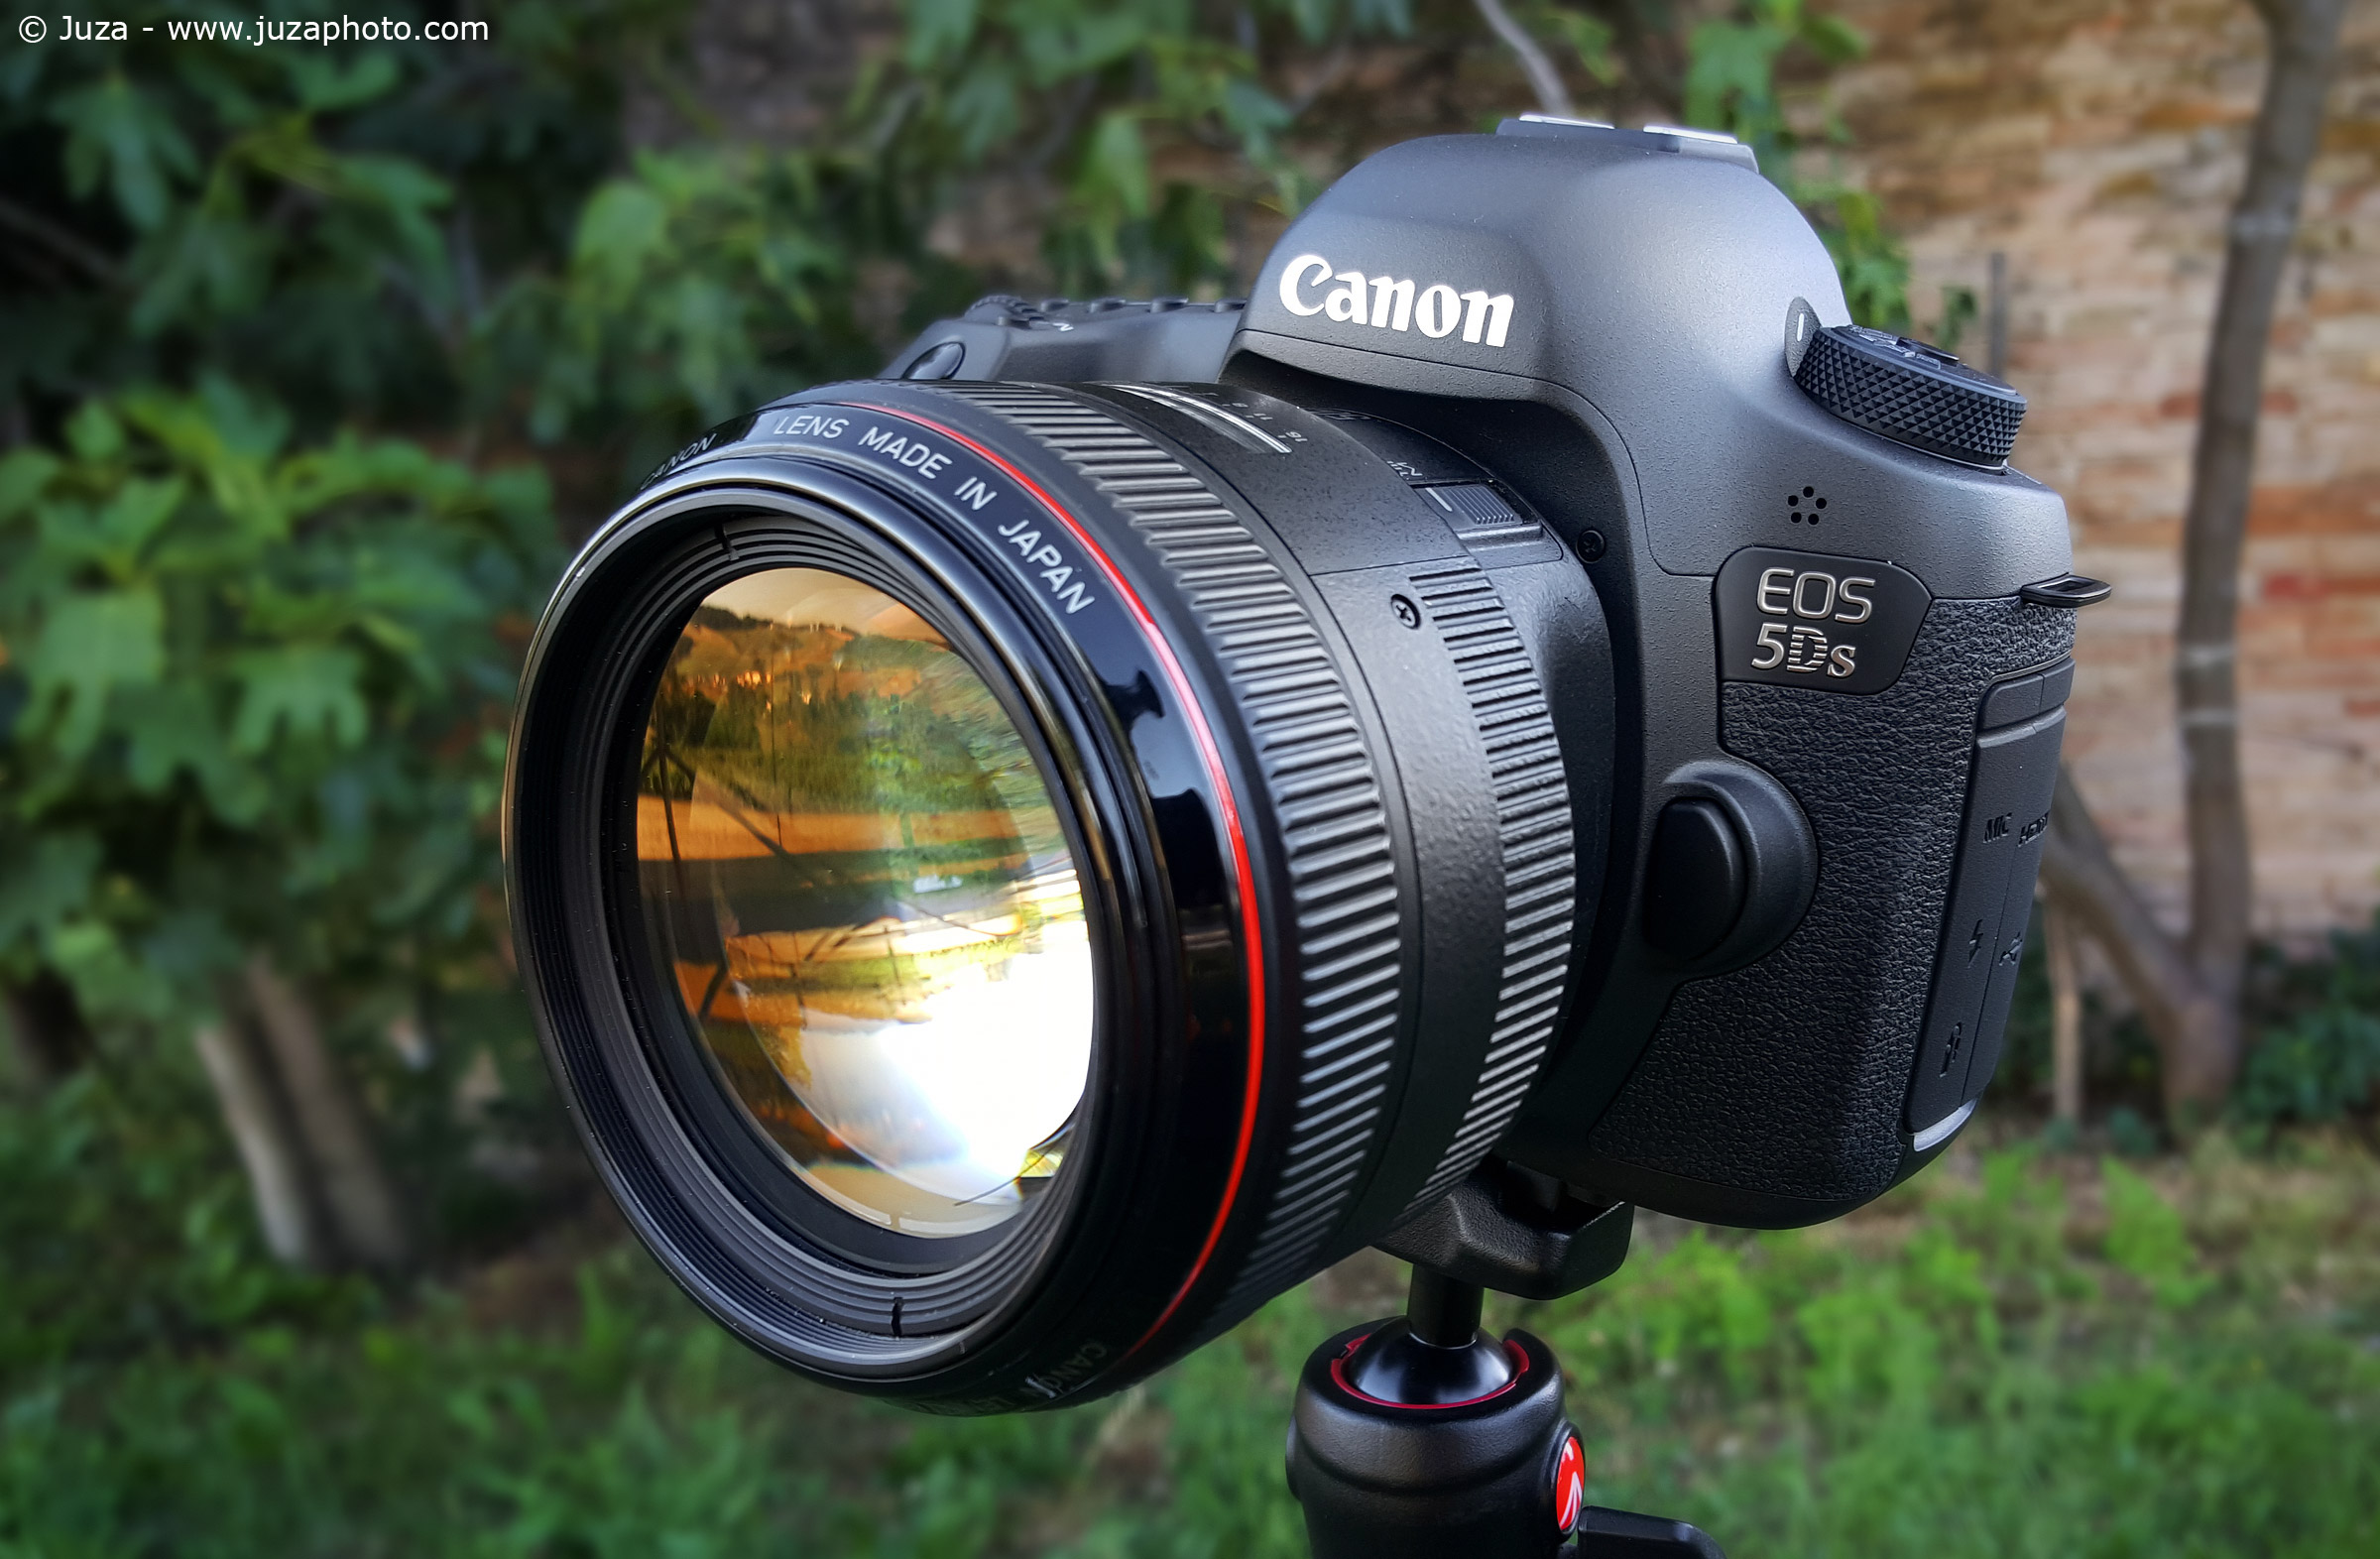 Canon 5Ds review | JuzaPhoto